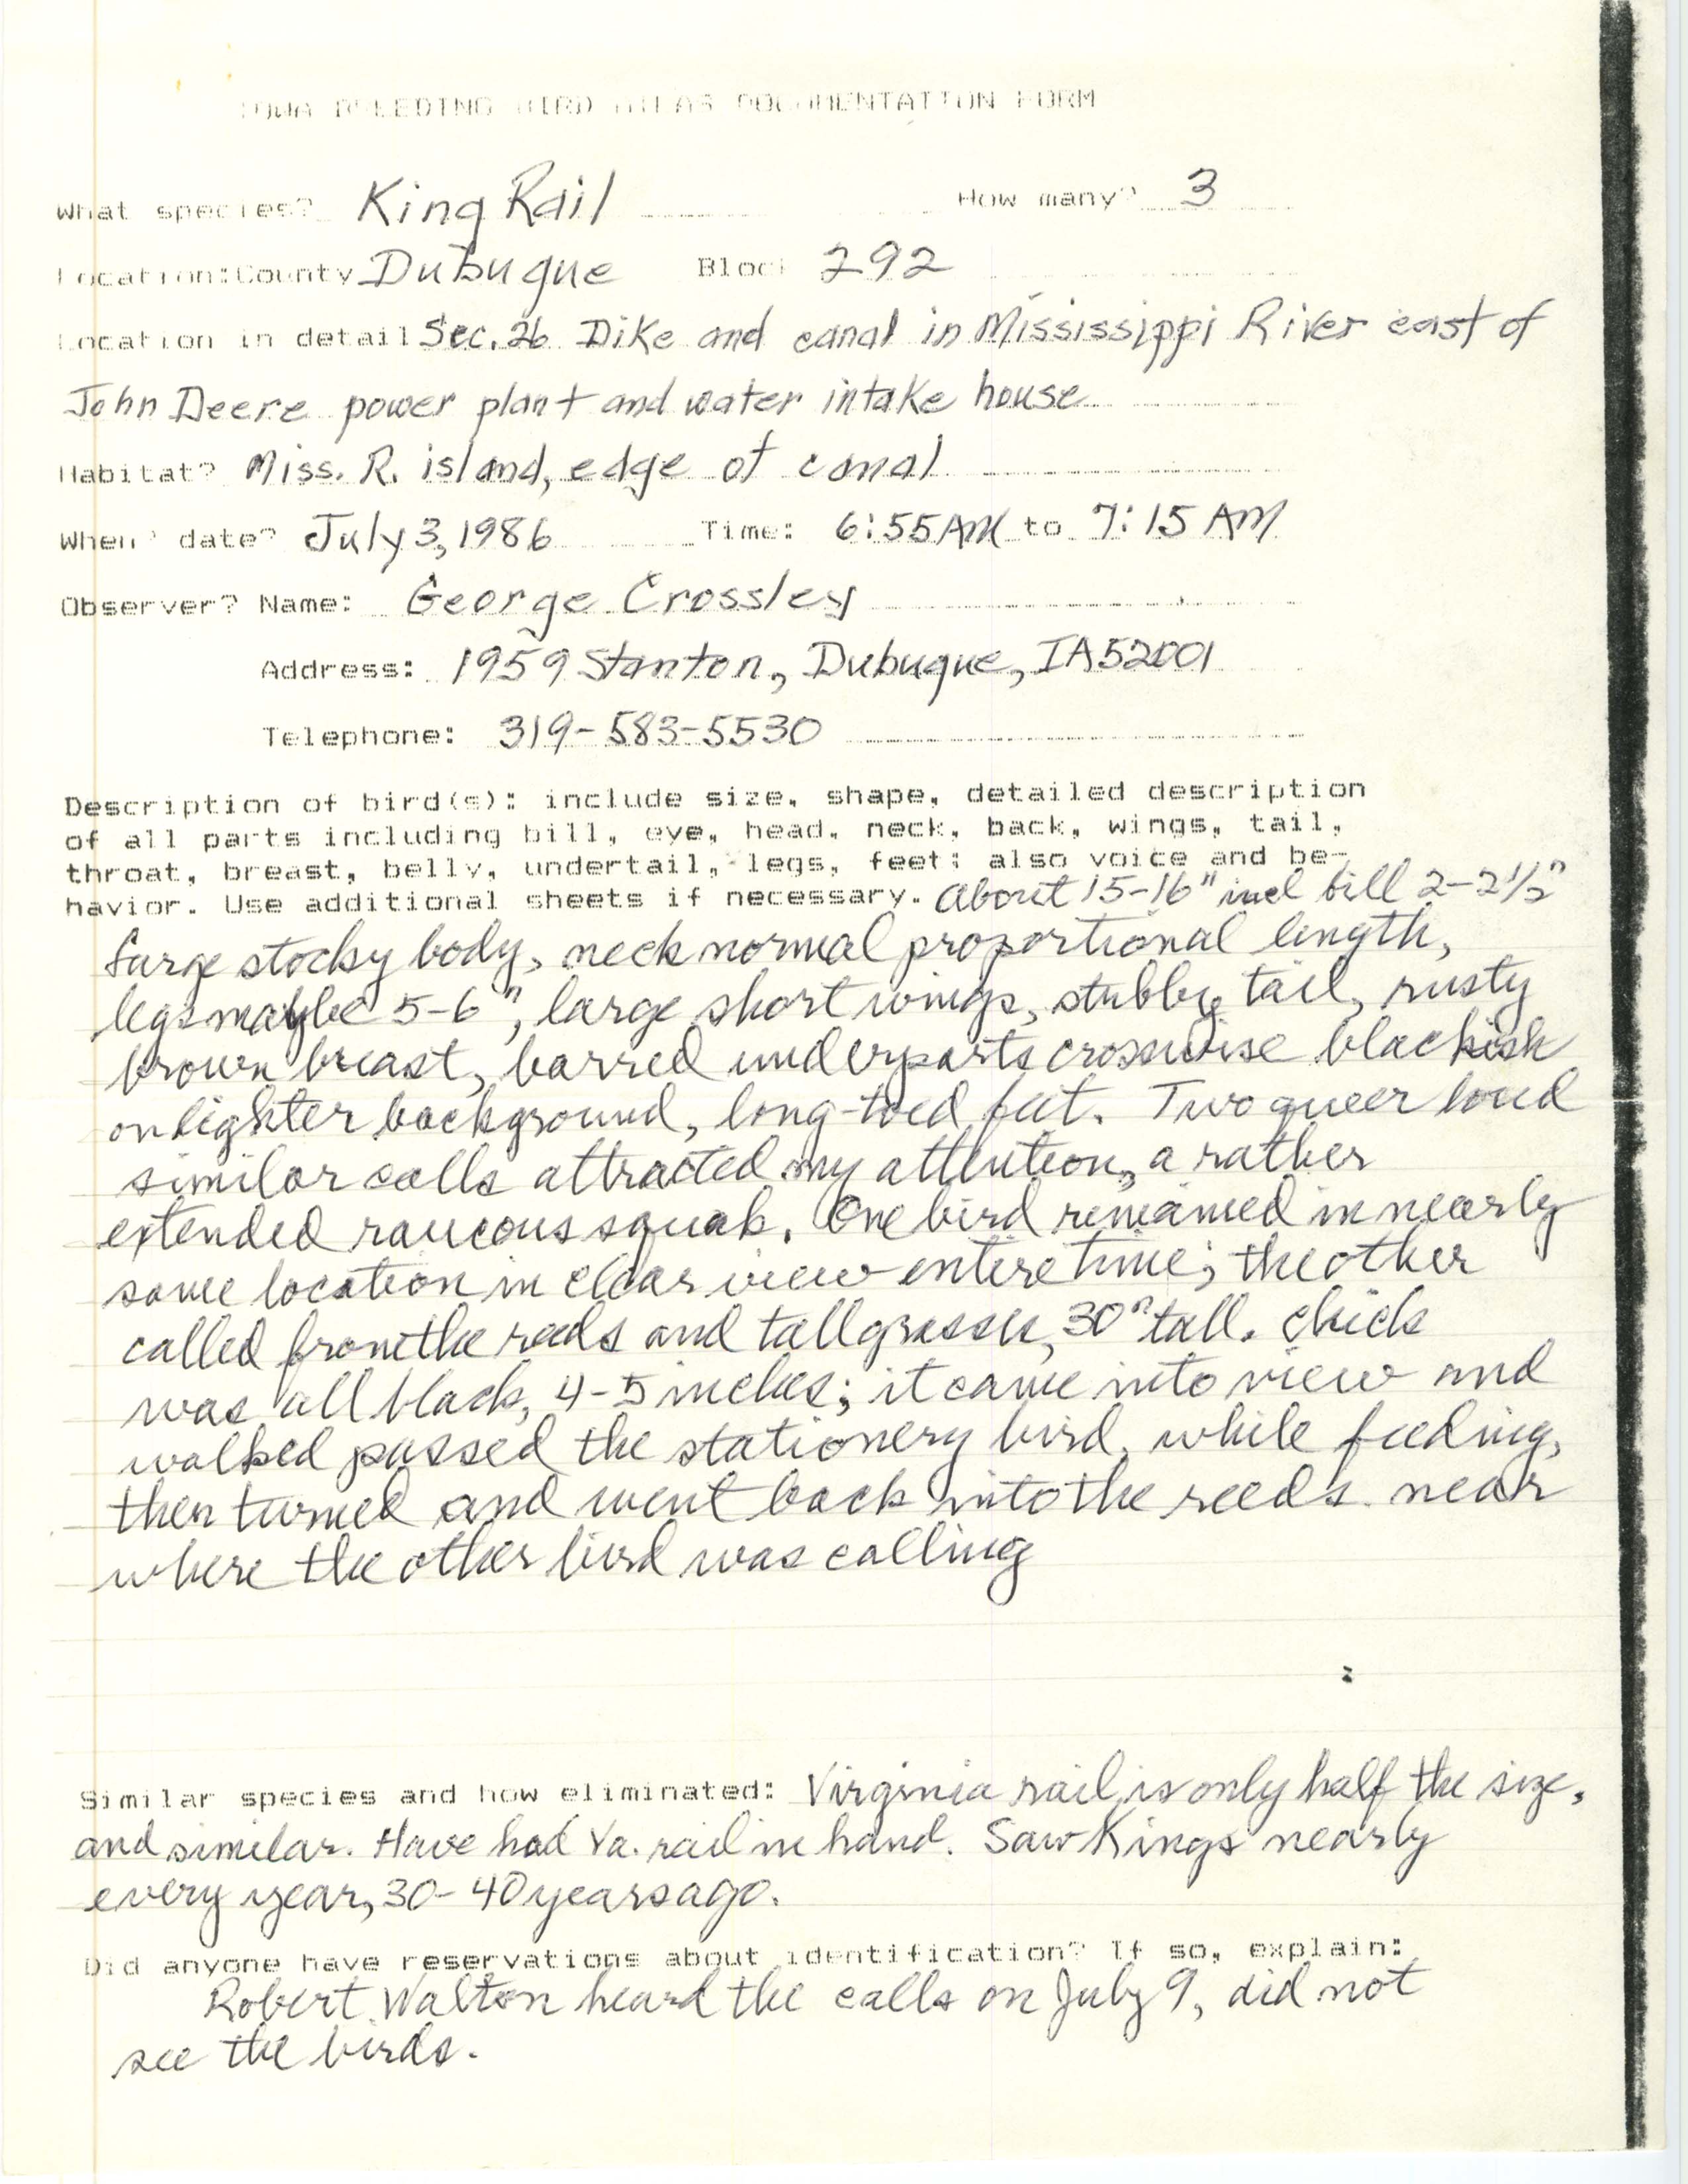 Rare bird documentation form for King Rail north of Dubuque, 1986